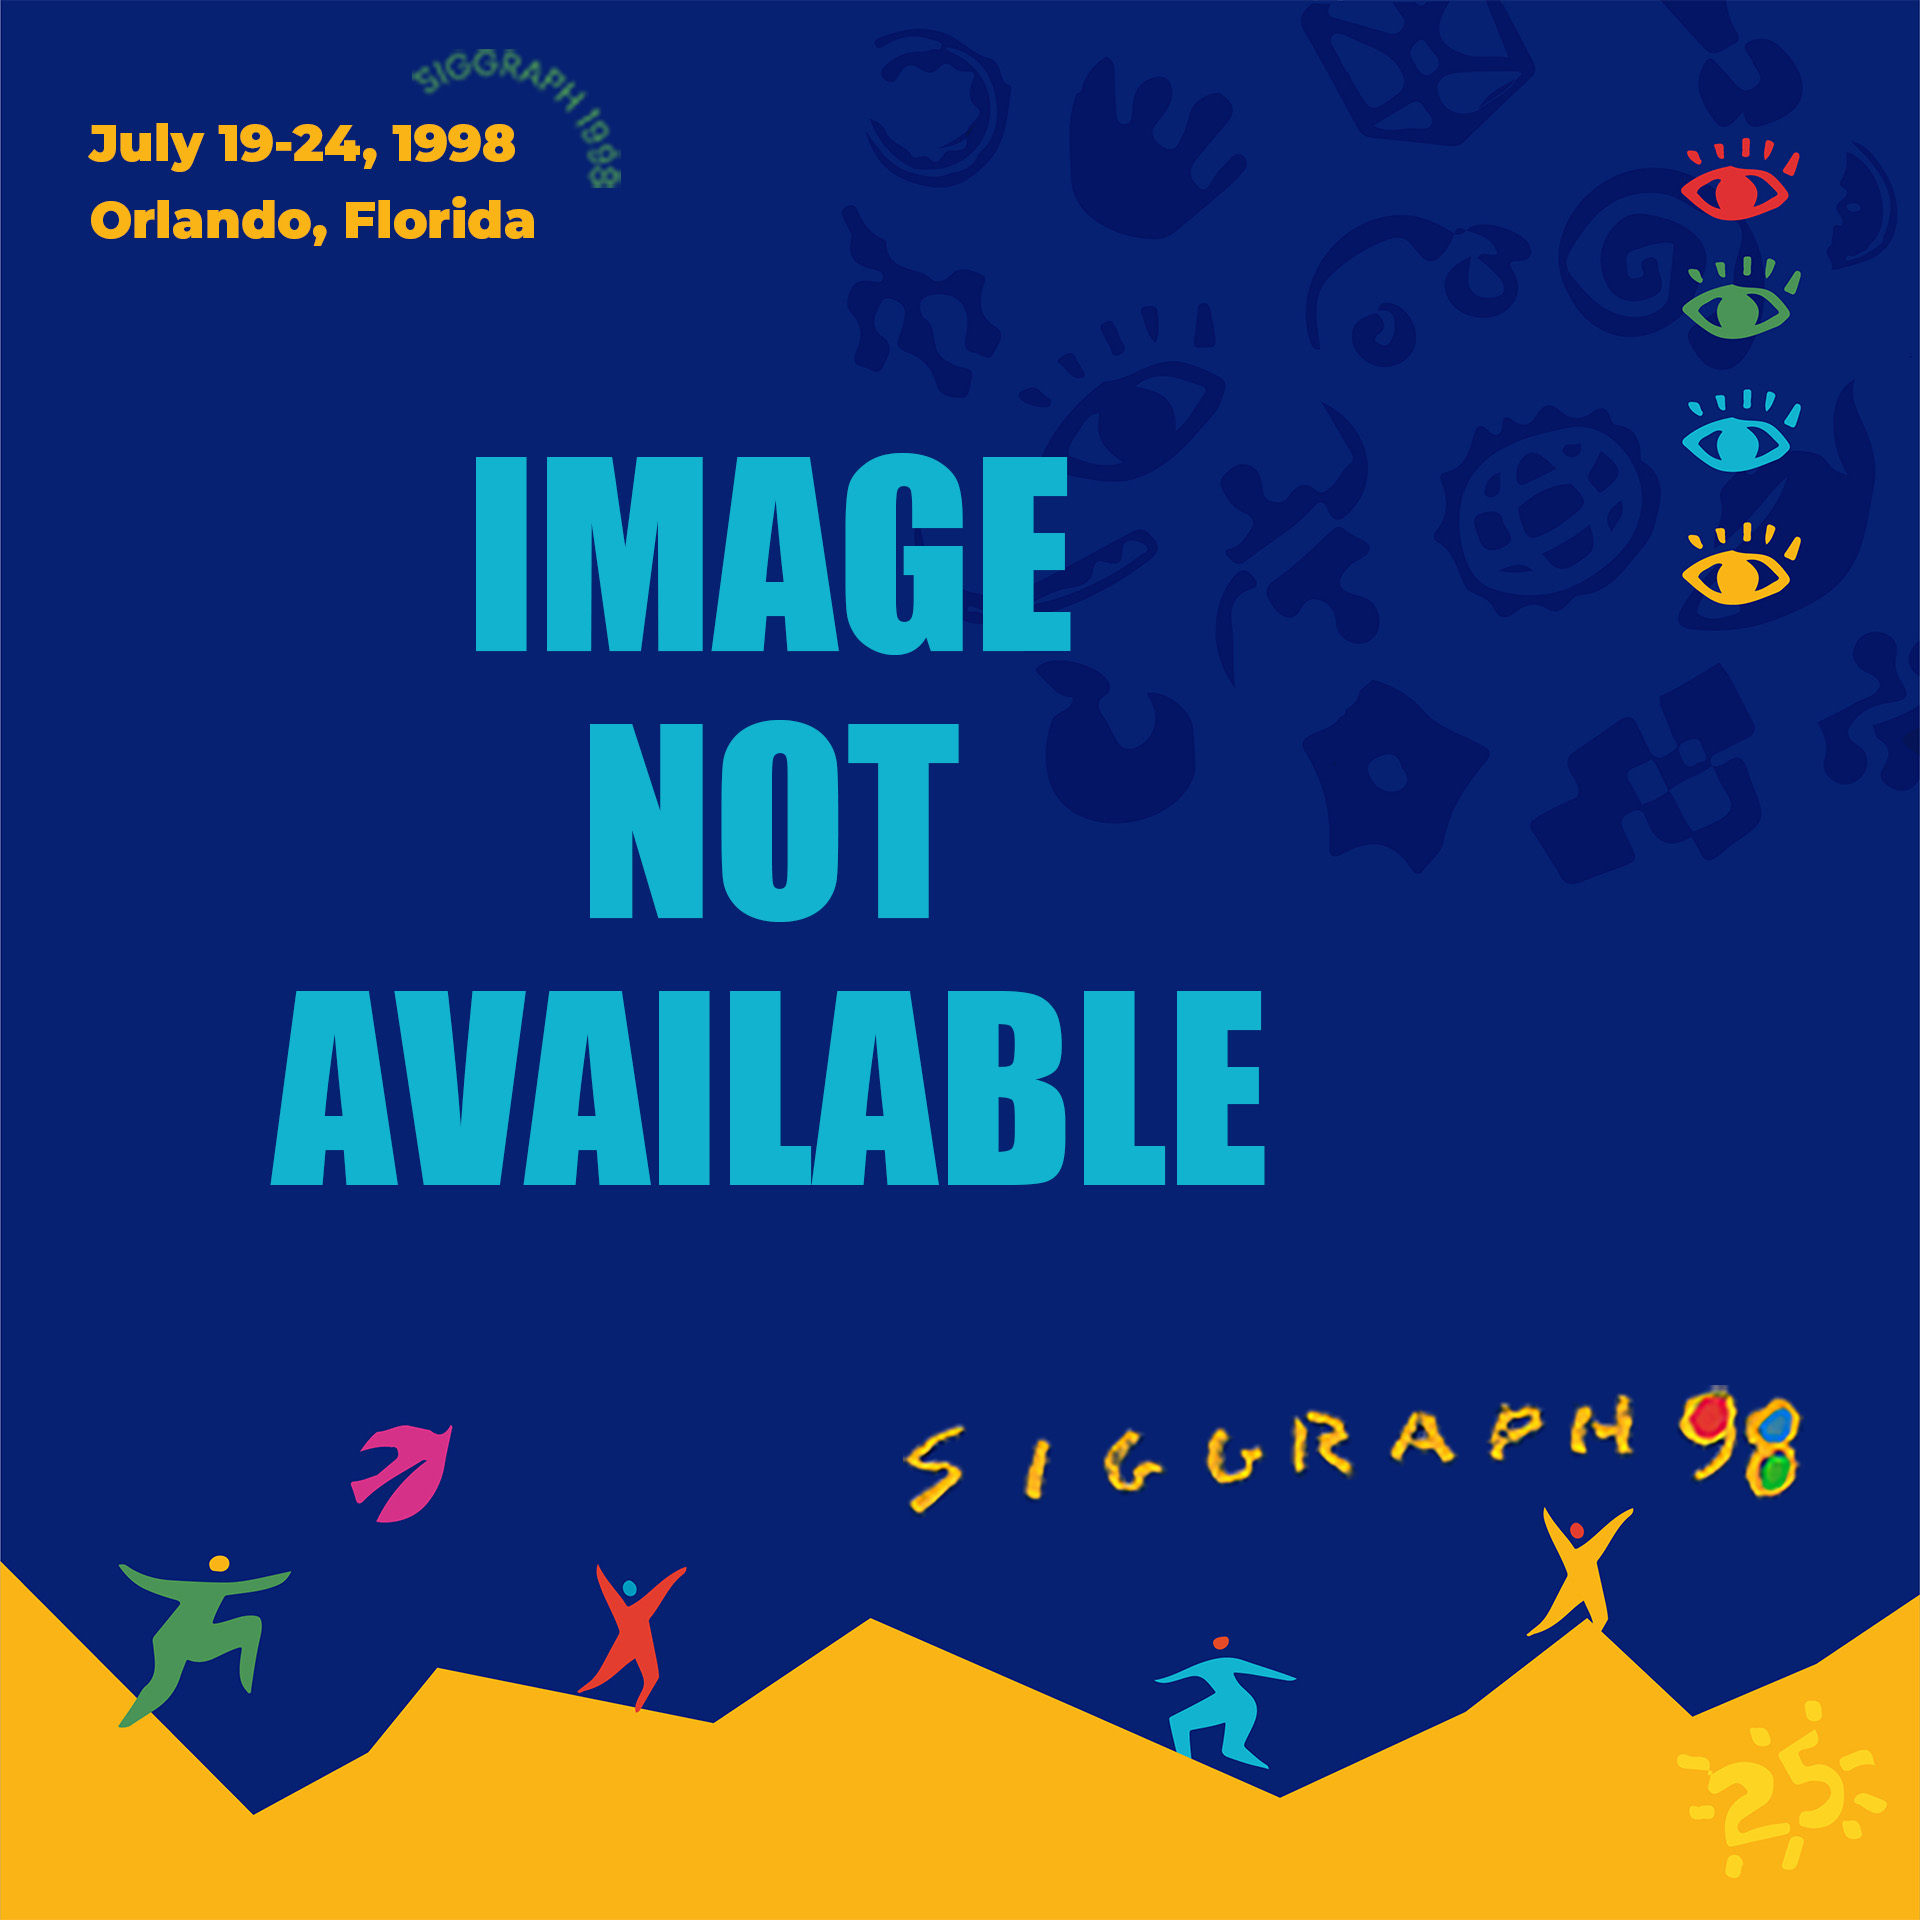 ©129, SIGGRAPH 98 sigKIDS Theater Program